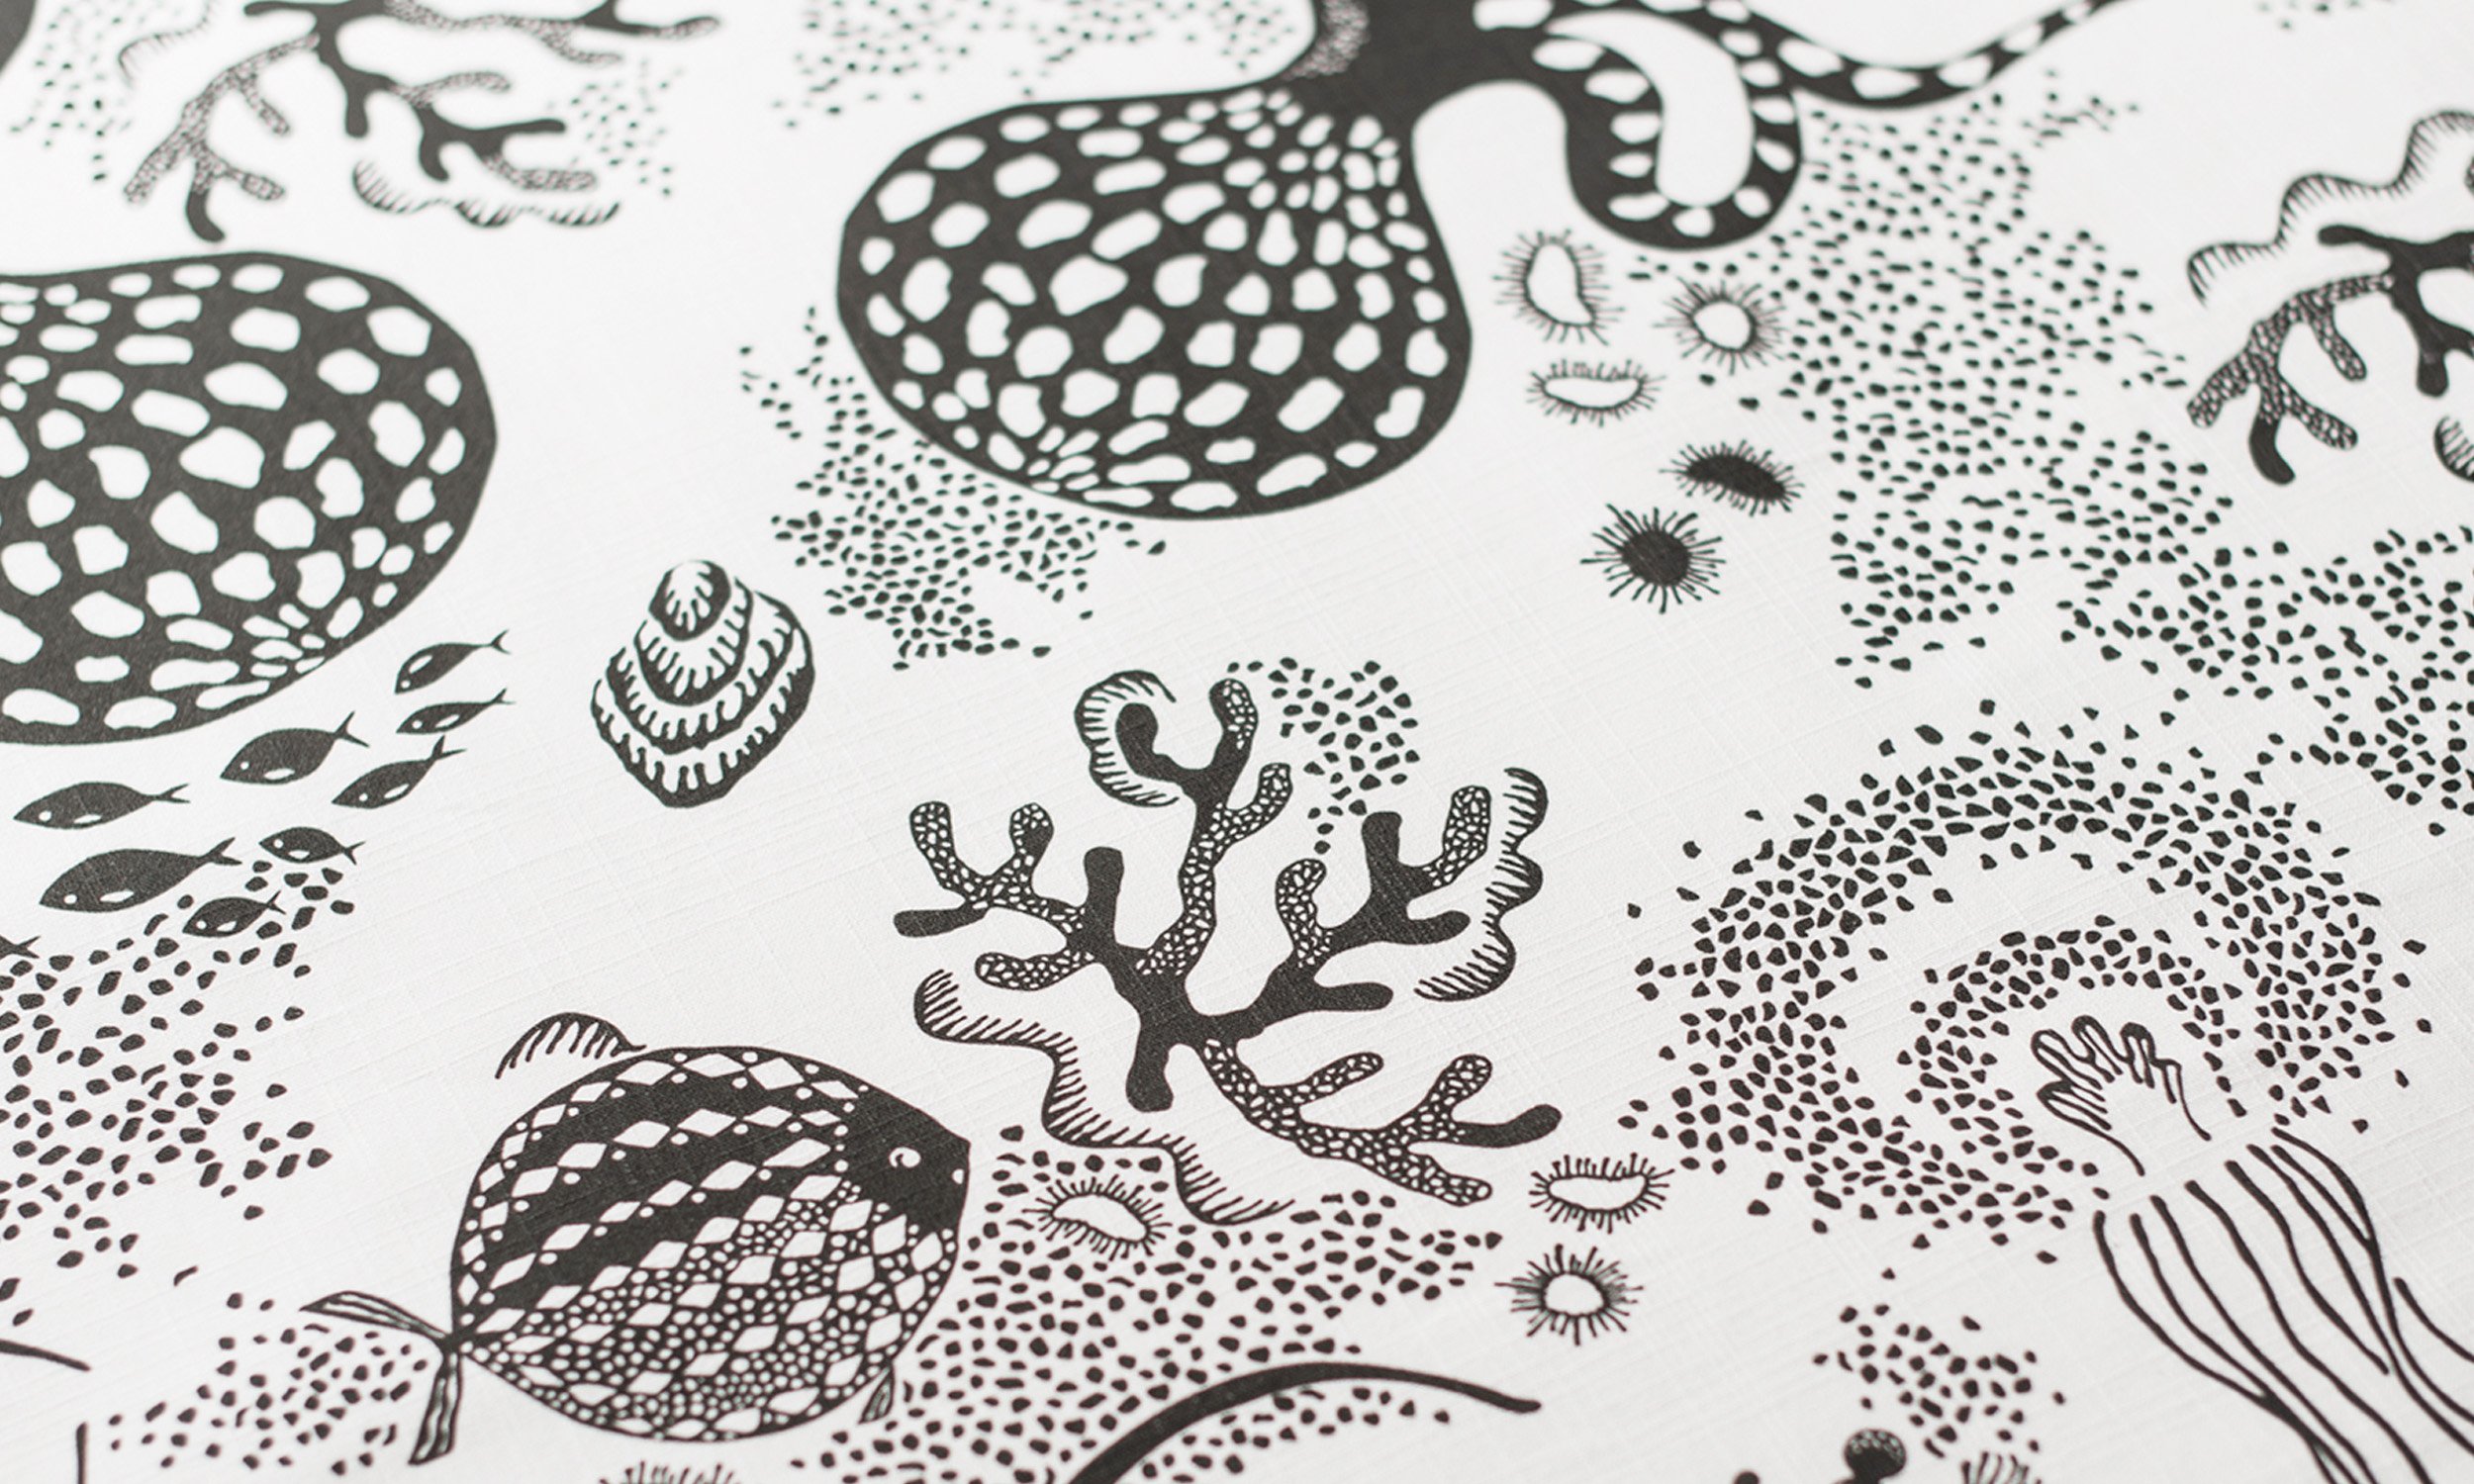 Camilla Lundsten WEB-A Aquatic white fabric closeup.jpg